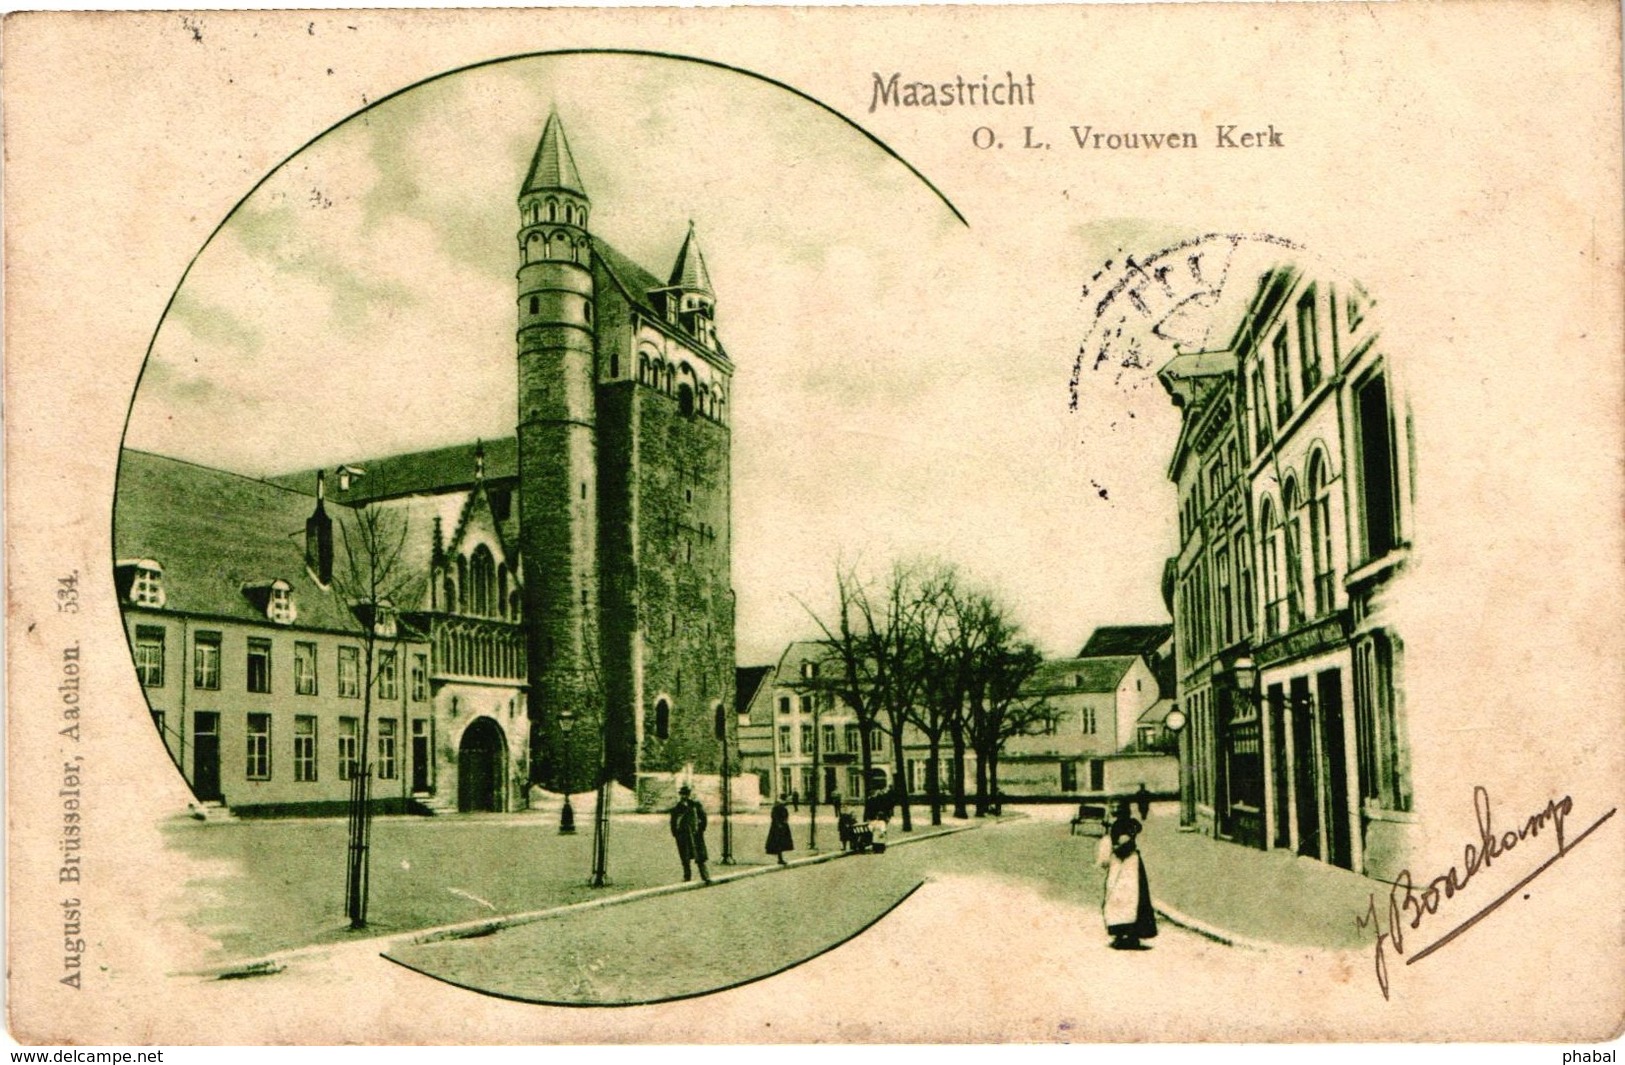 The Netherlands, Maastricht, O. L. Vrouwen Kerk, Old Postcard 1902 - Maastricht